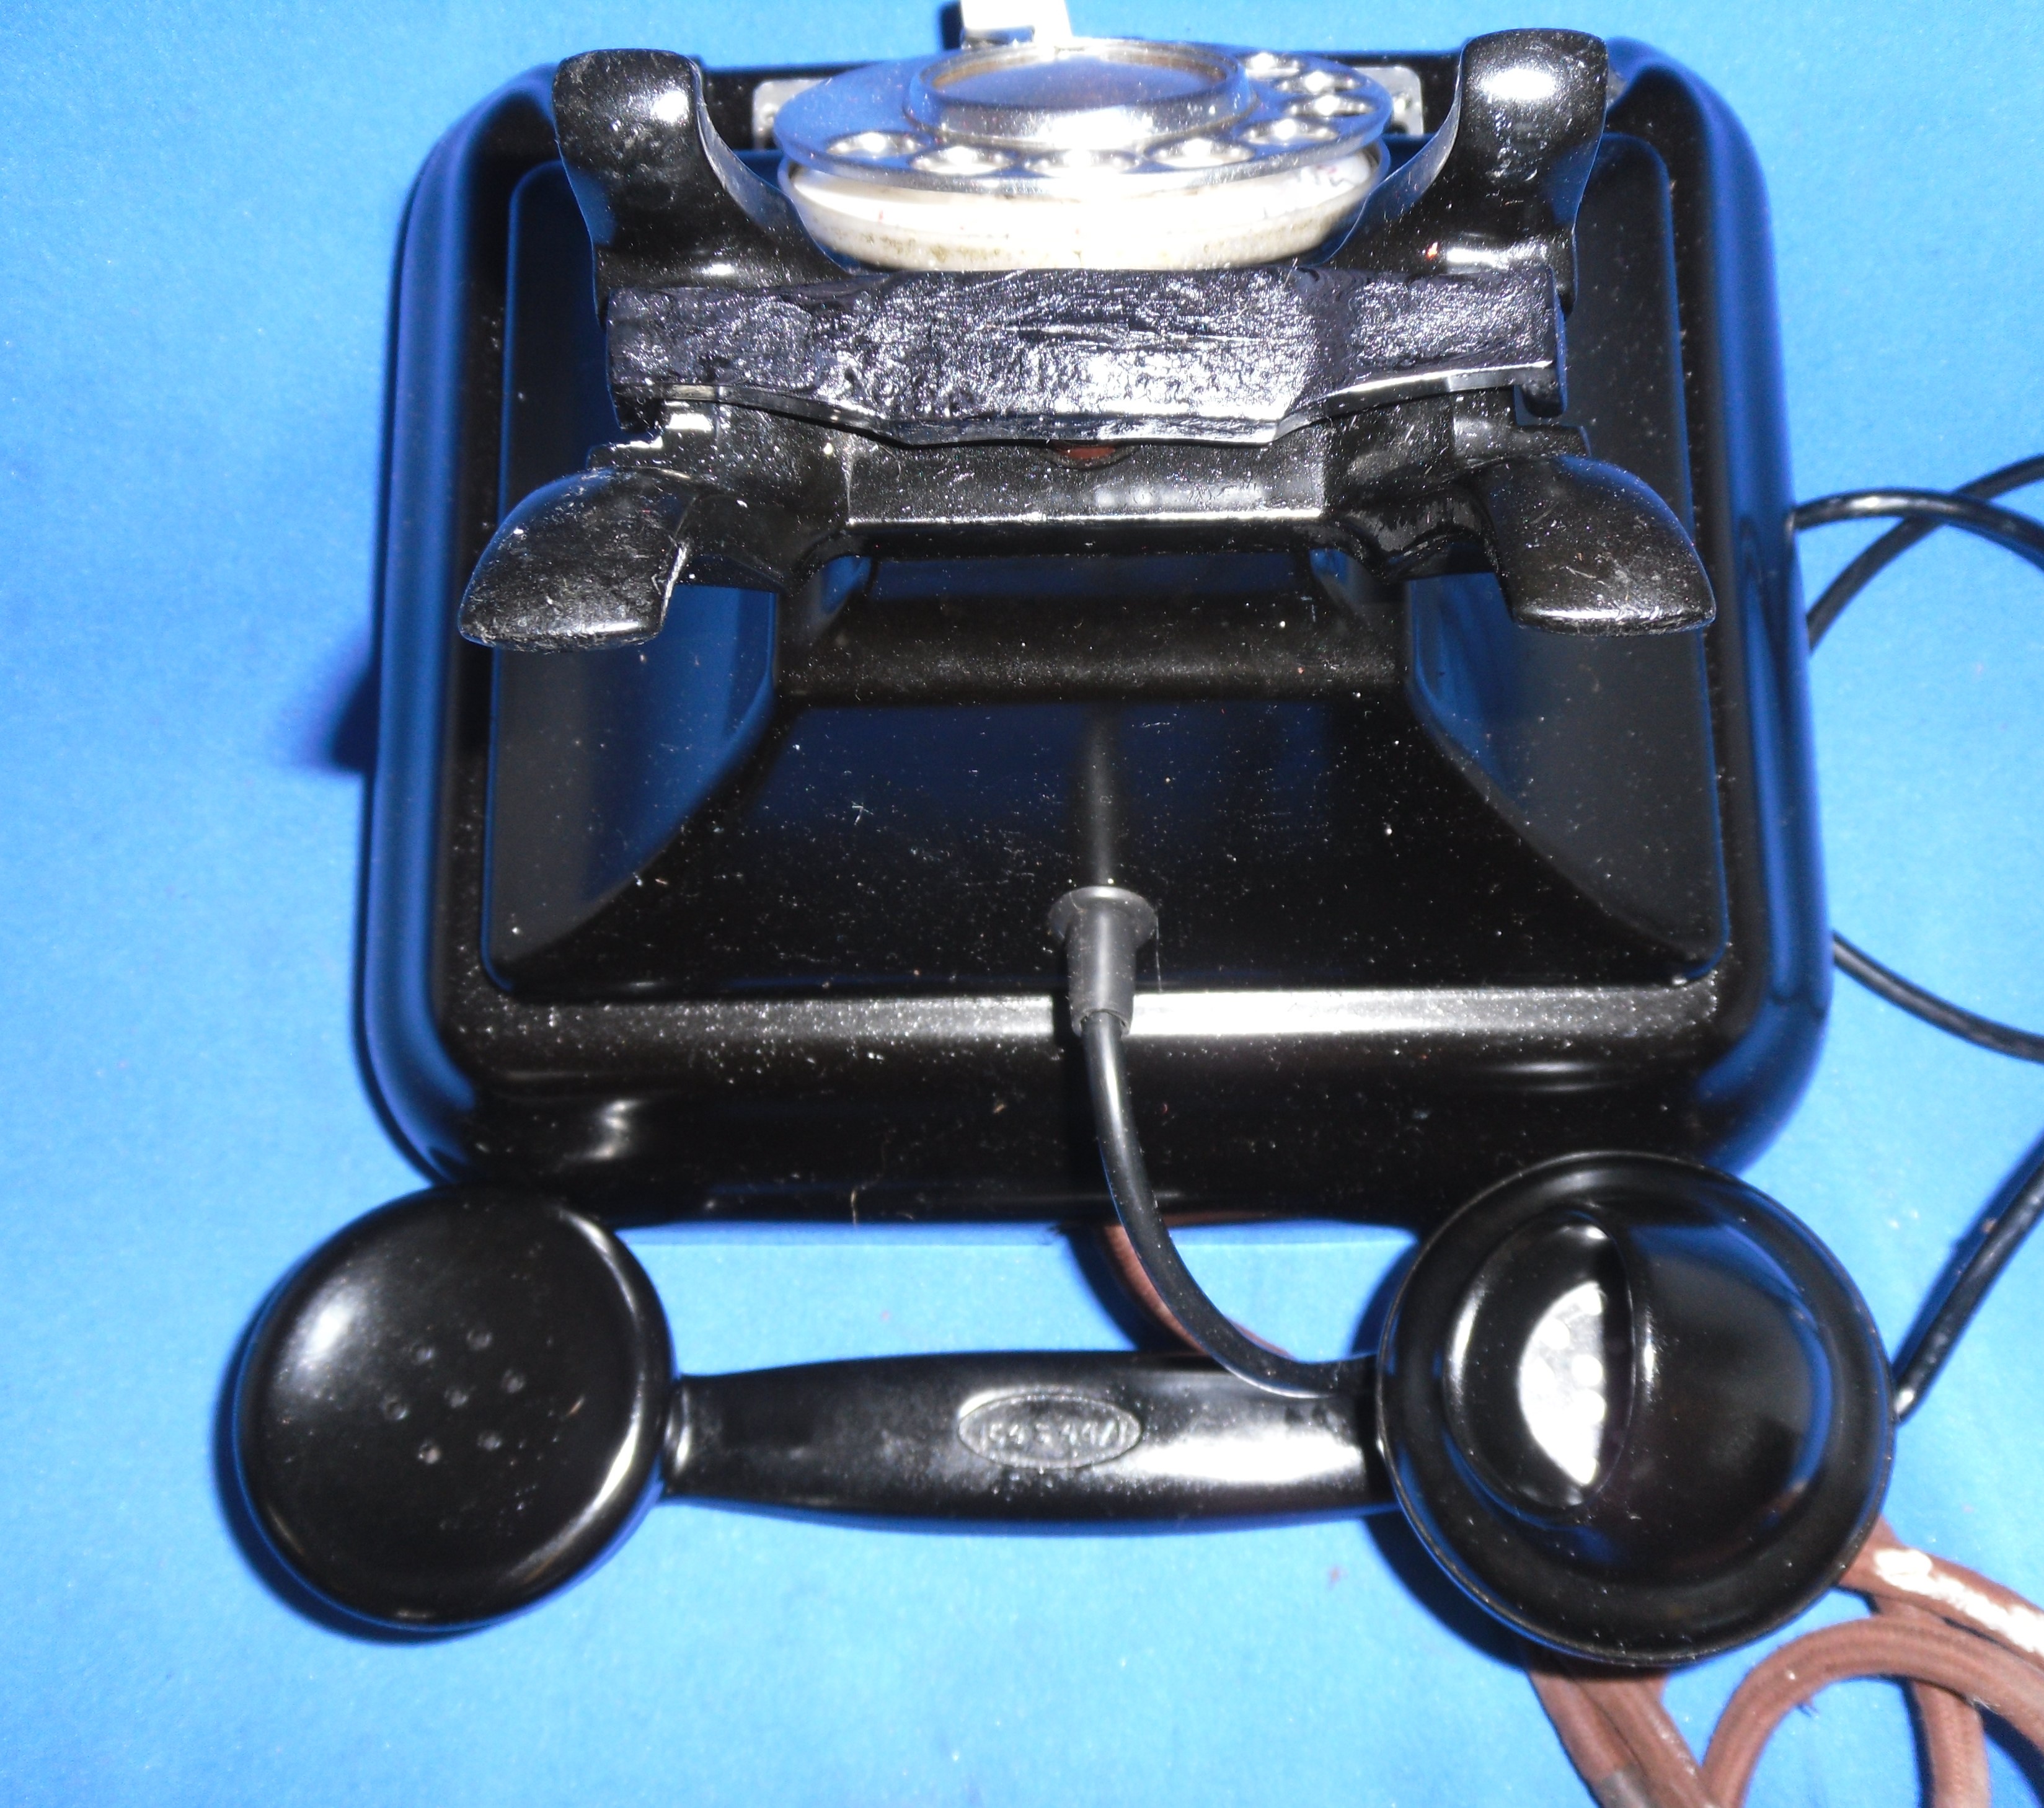 1930s Telephone Pyramid GPO King with Intercom Switching 232 Series Bakelite Telephone With Interco - Image 5 of 9